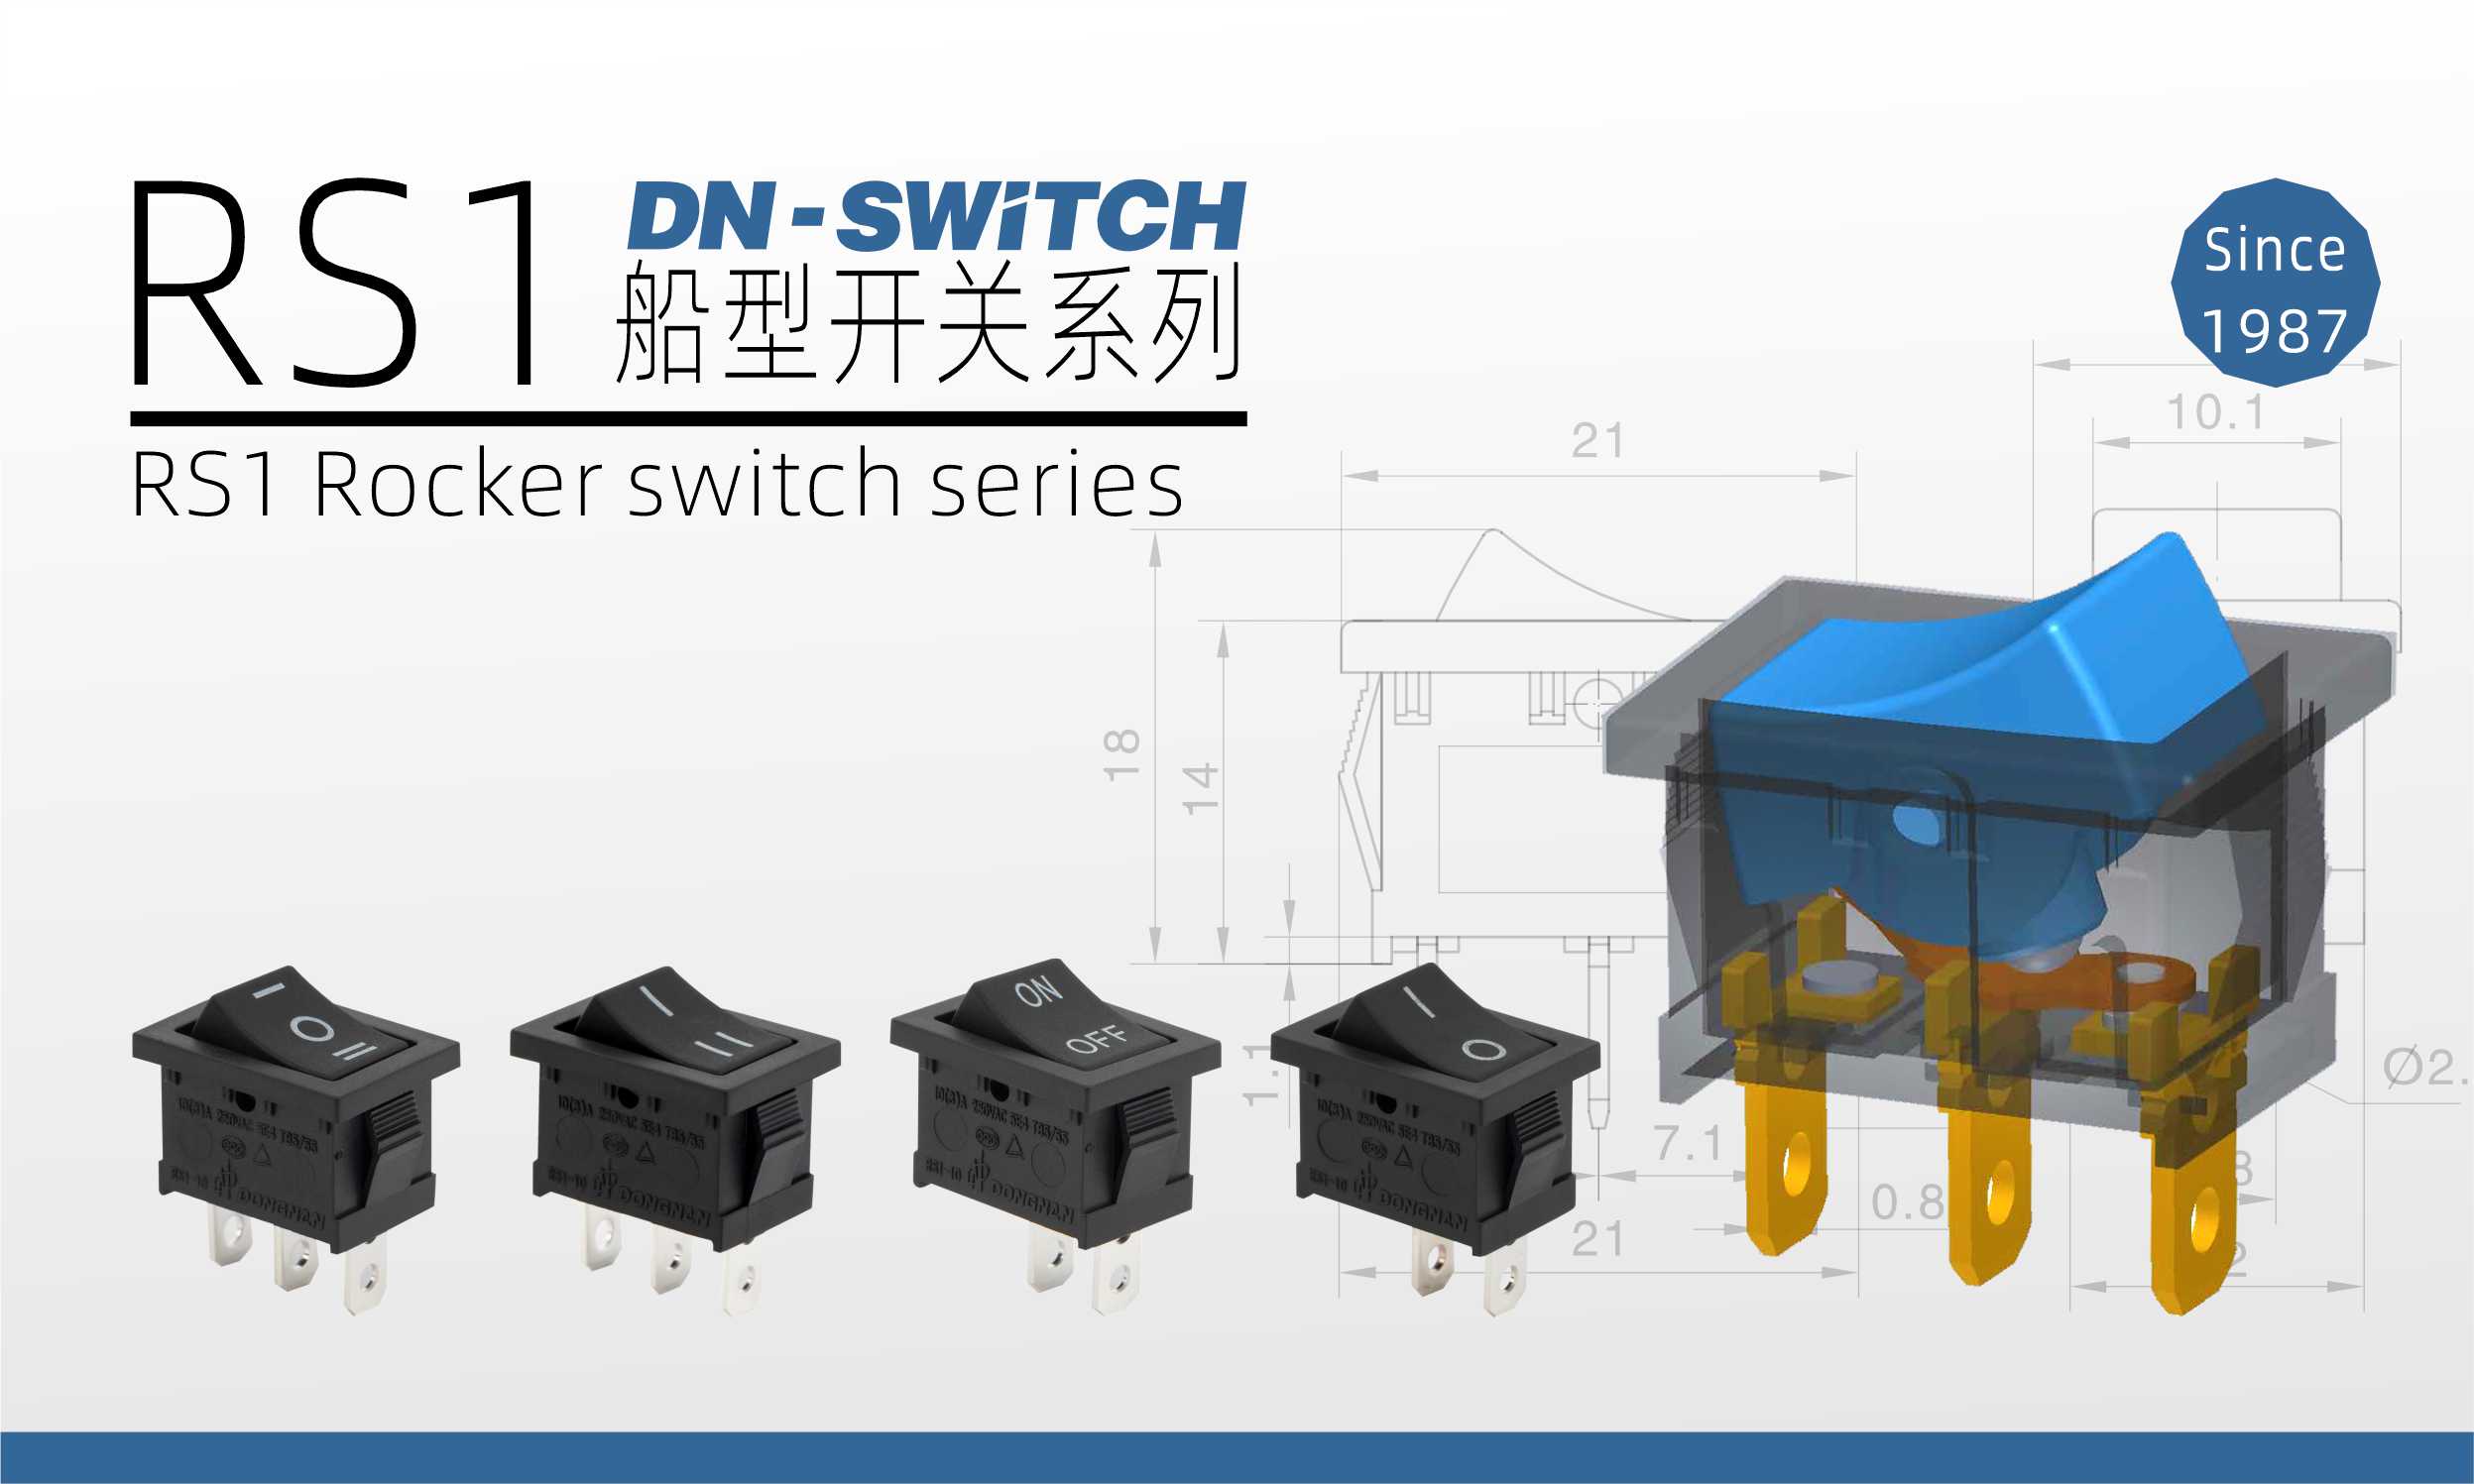 DONGNAN スイッチ - シンプルで信頼性の高い RS1 ロッカー スイッチ